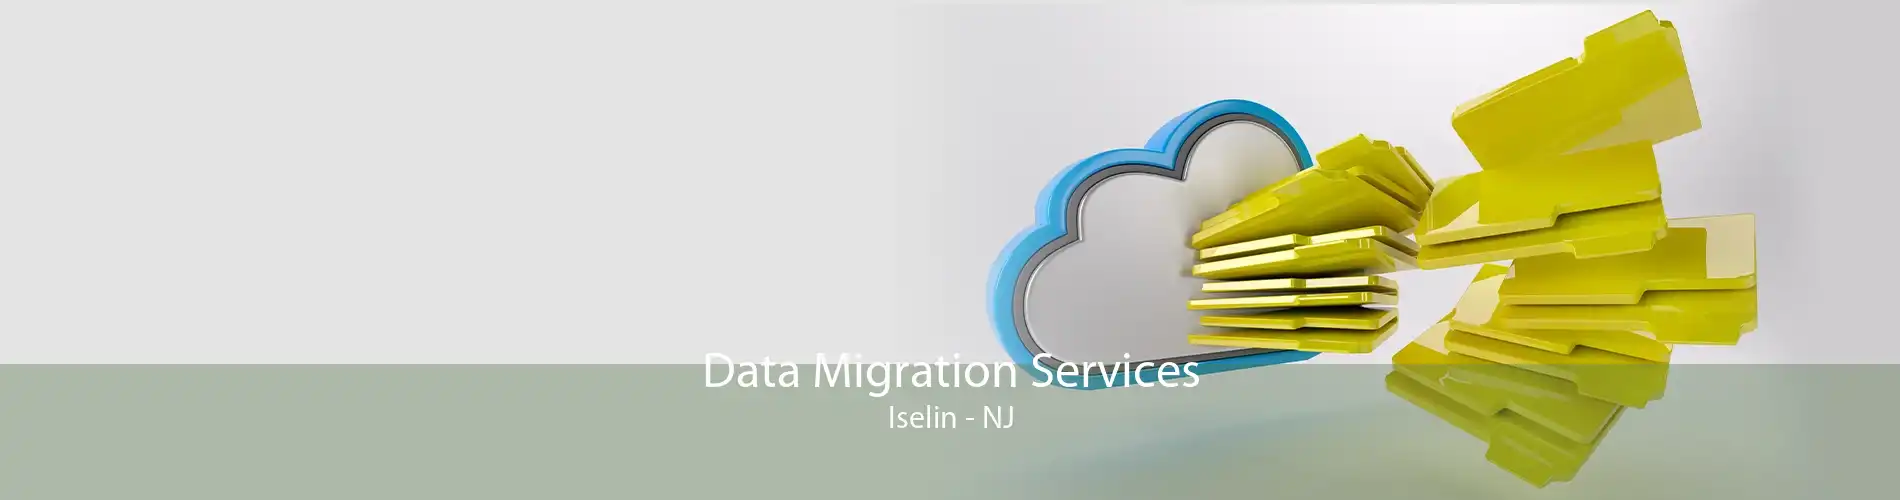 Data Migration Services Iselin - NJ